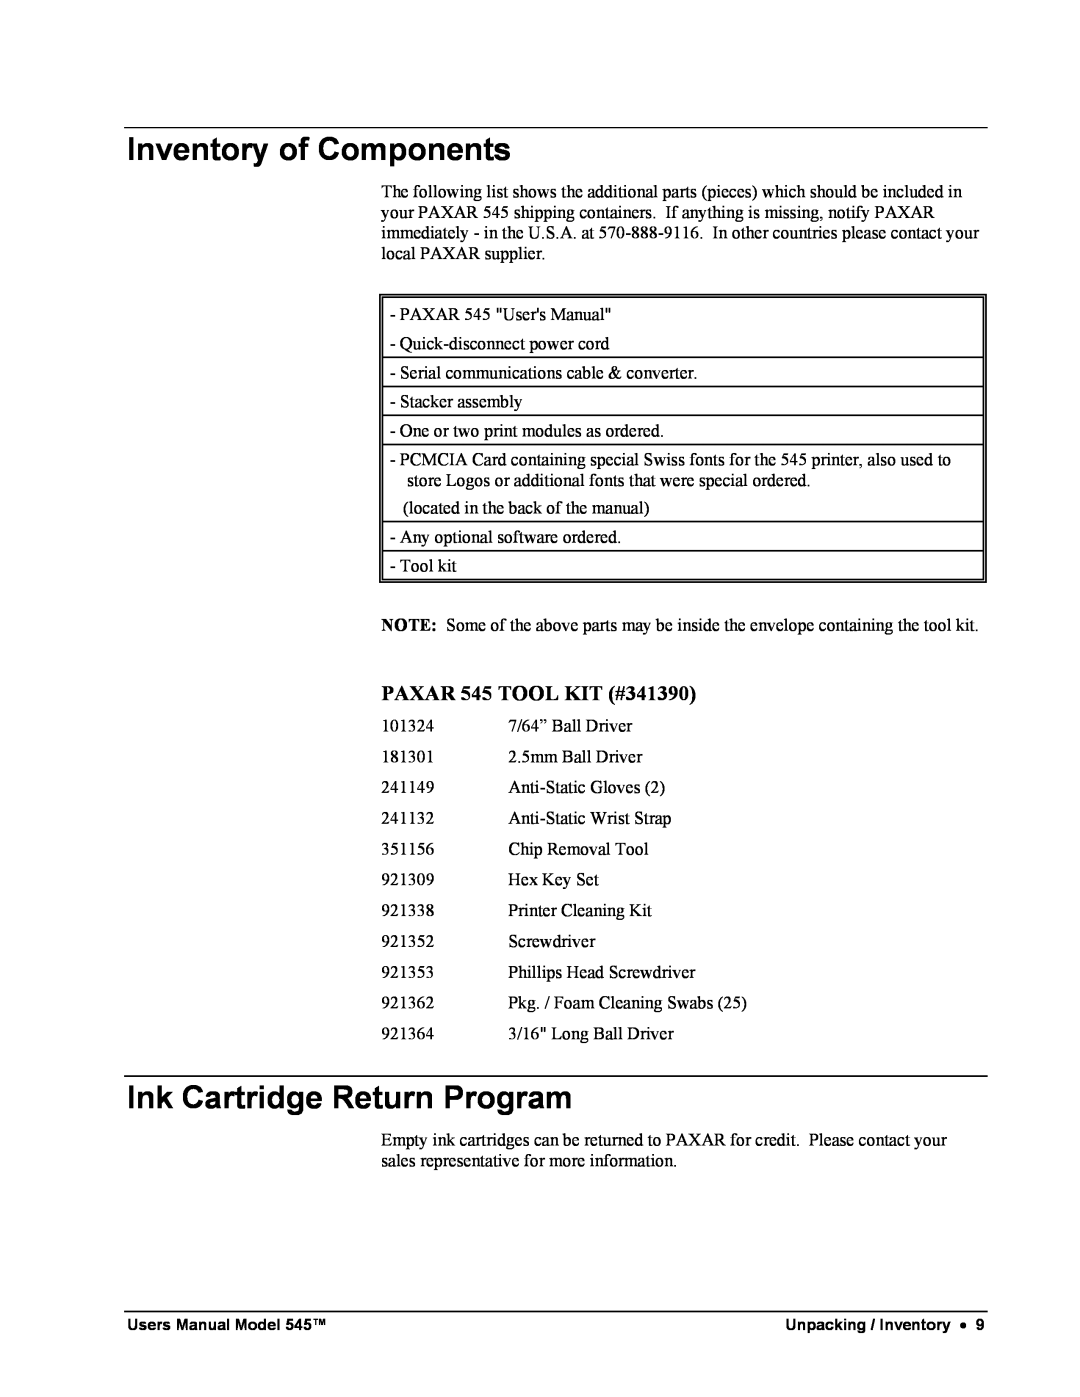 Paxar user manual Inventory of Components, Ink Cartridge Return Program, PAXAR 545 TOOL KIT #341390 